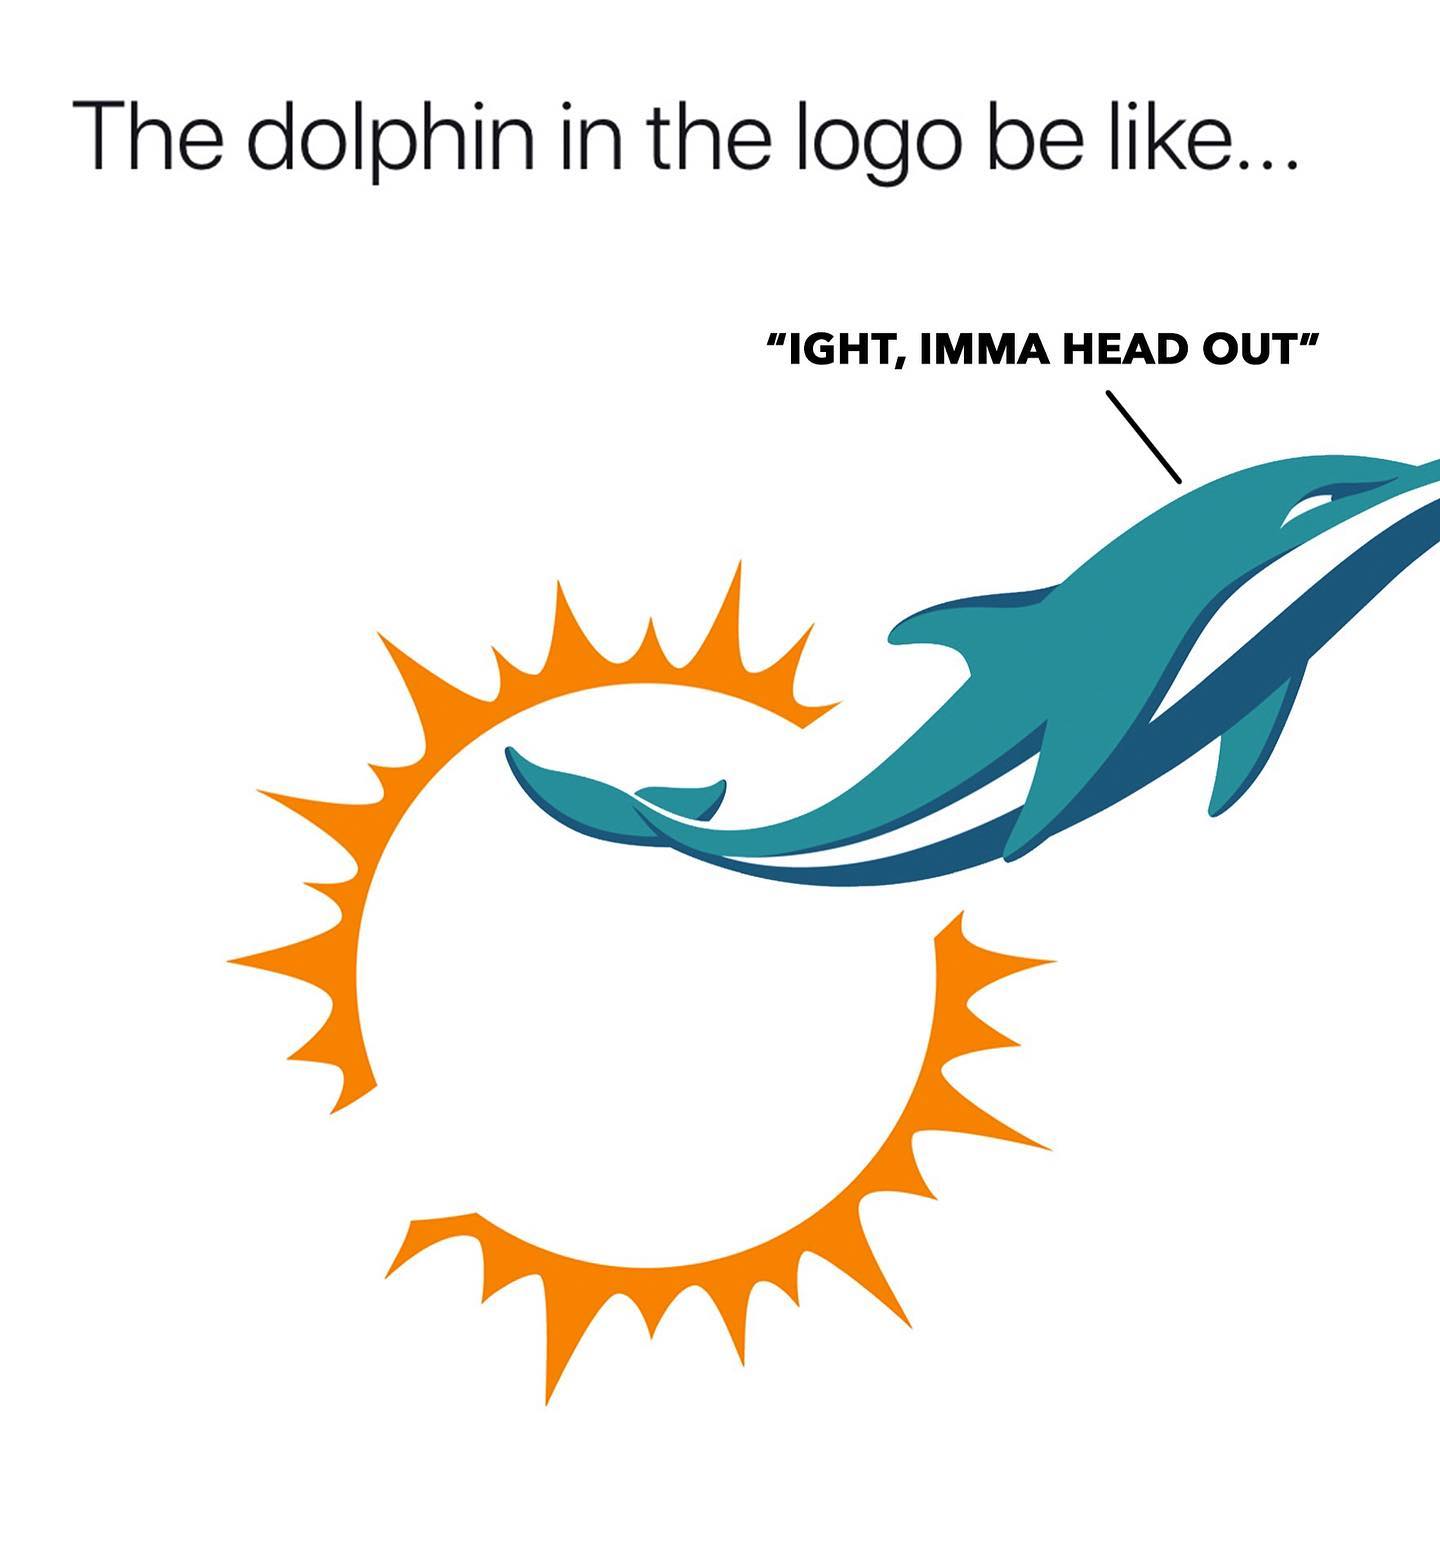 ight ima head out - dolphins logo meme - The dolphin in the logo be ... "Ight, Imma Head Out"